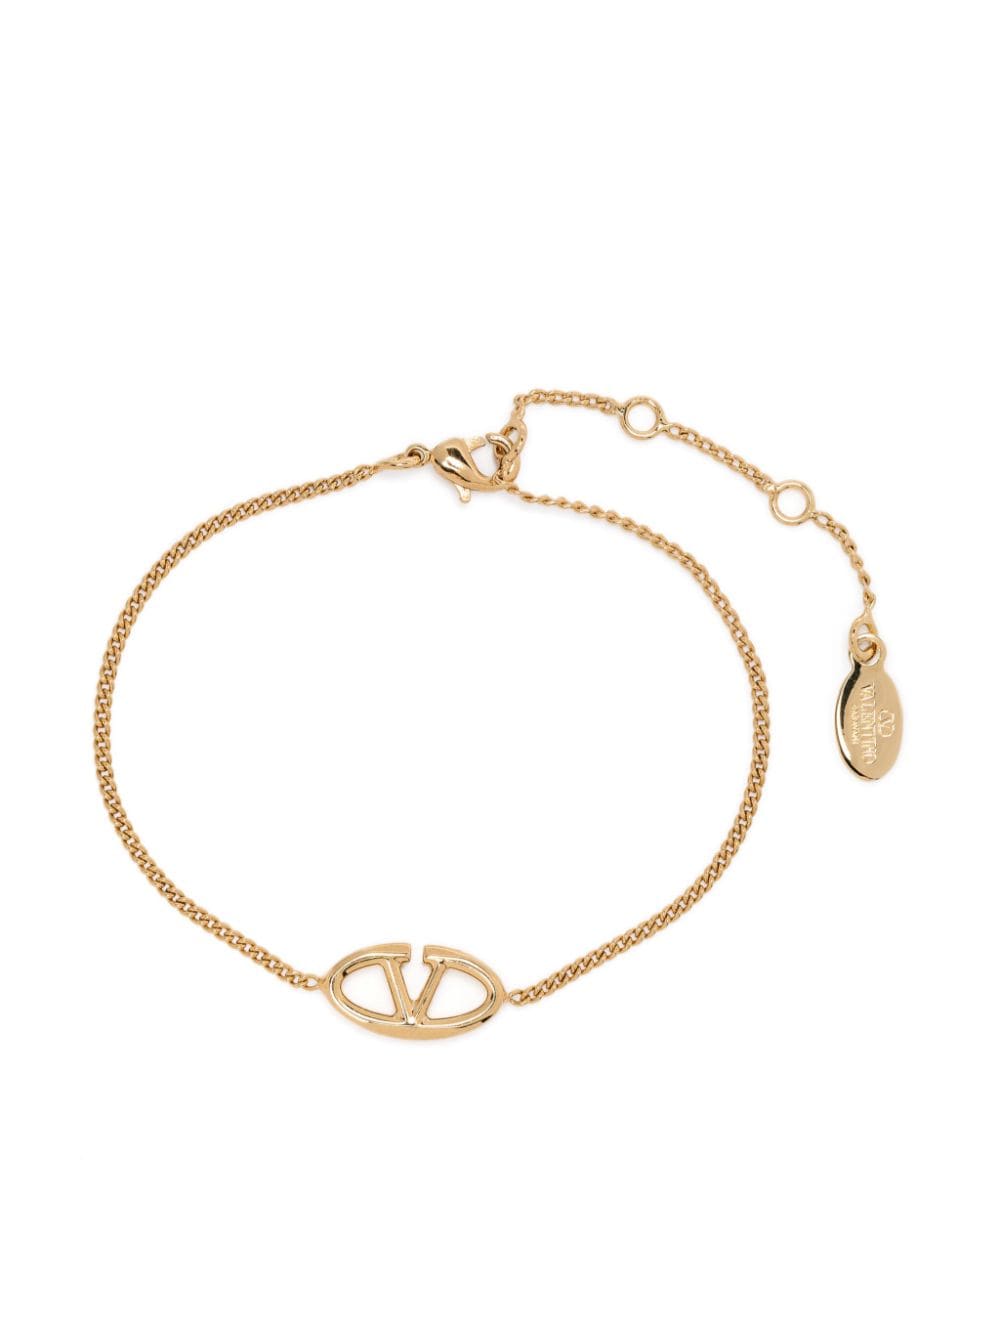 VLogo chain-link bracelet